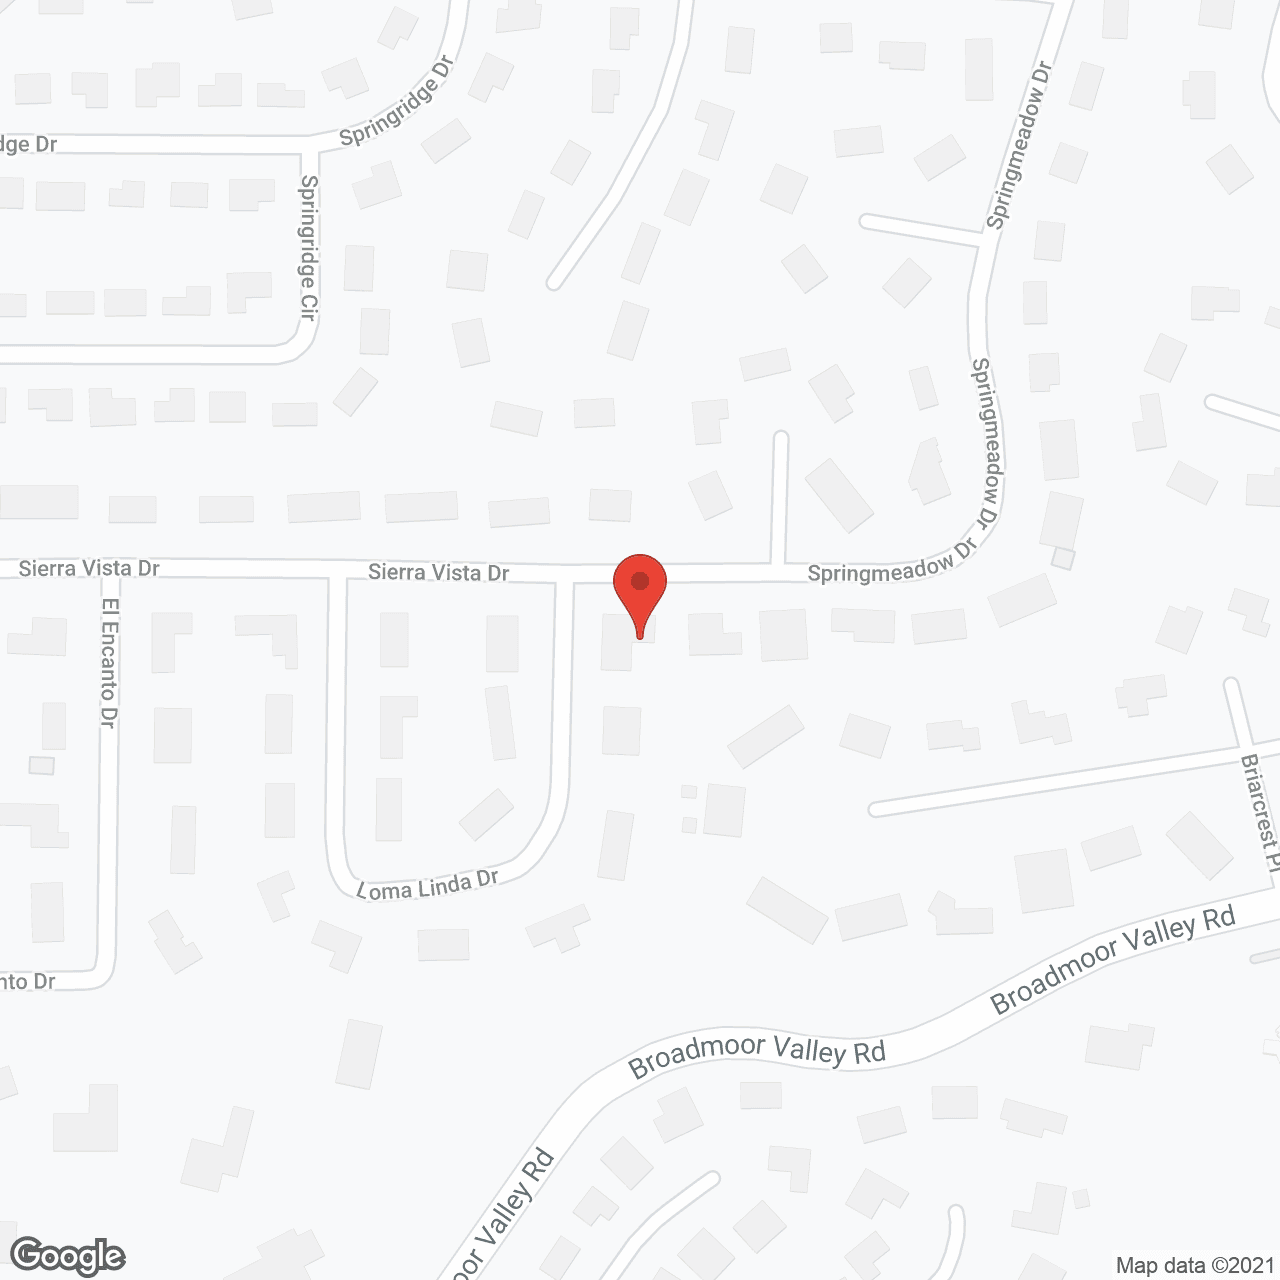 Constant Care Loma Linda in google map